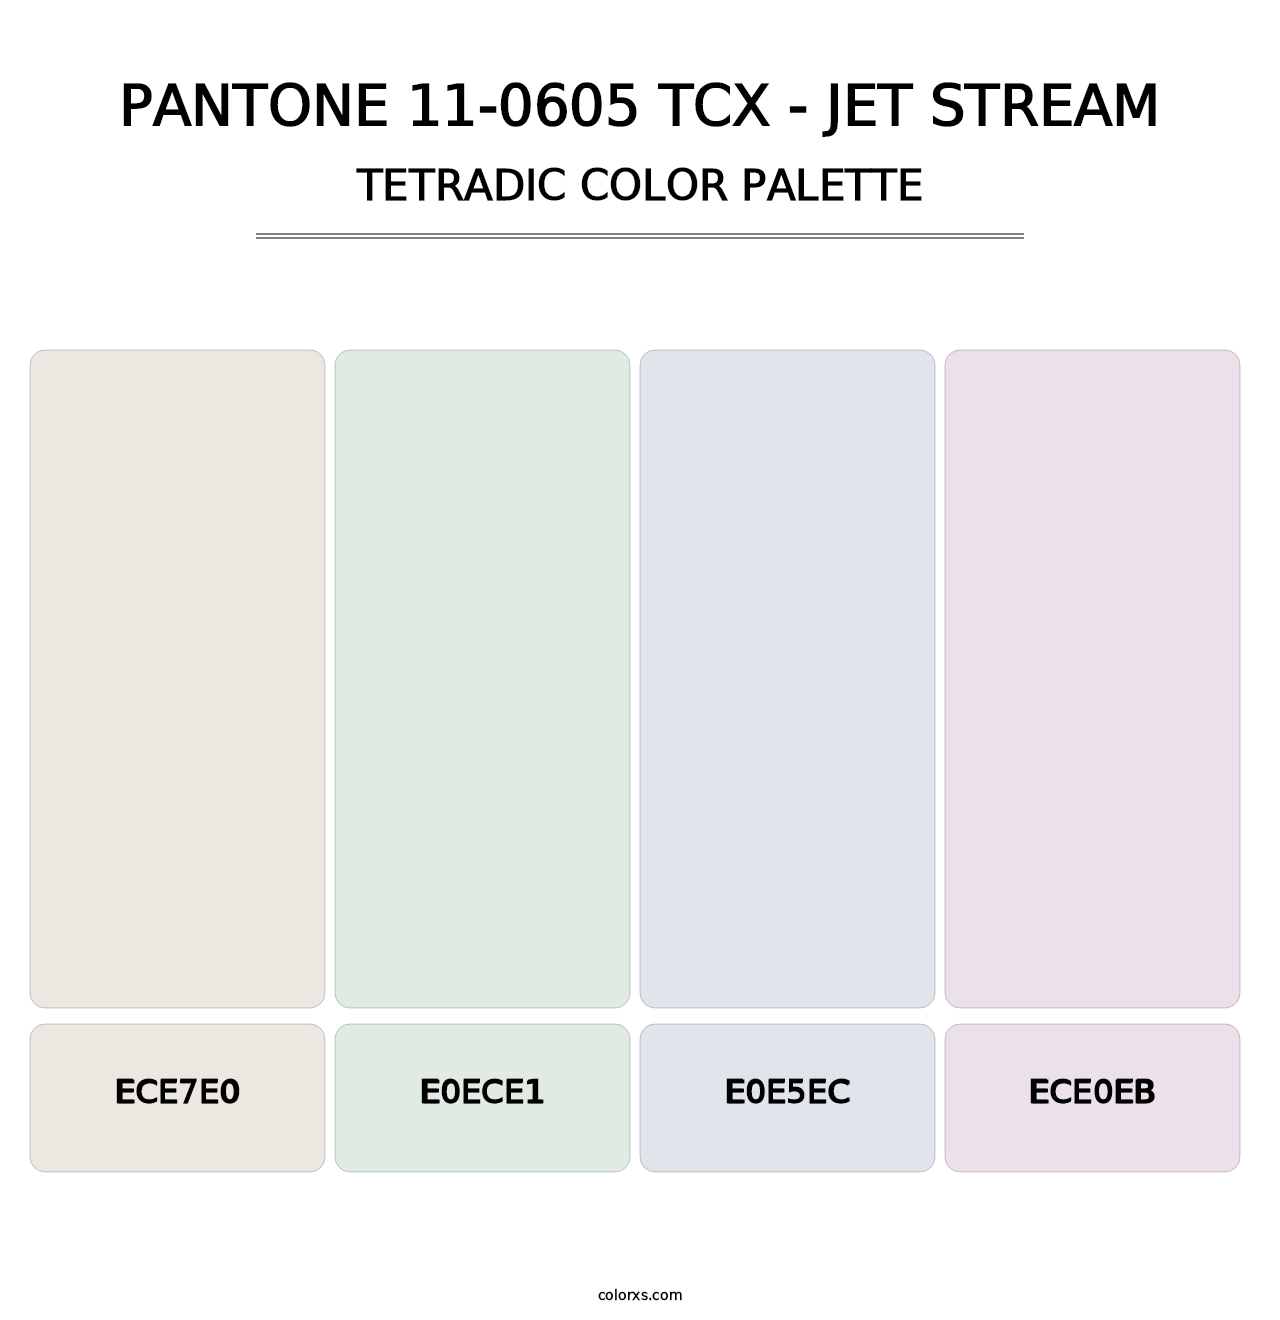 PANTONE 11-0605 TCX - Jet Stream - Tetradic Color Palette